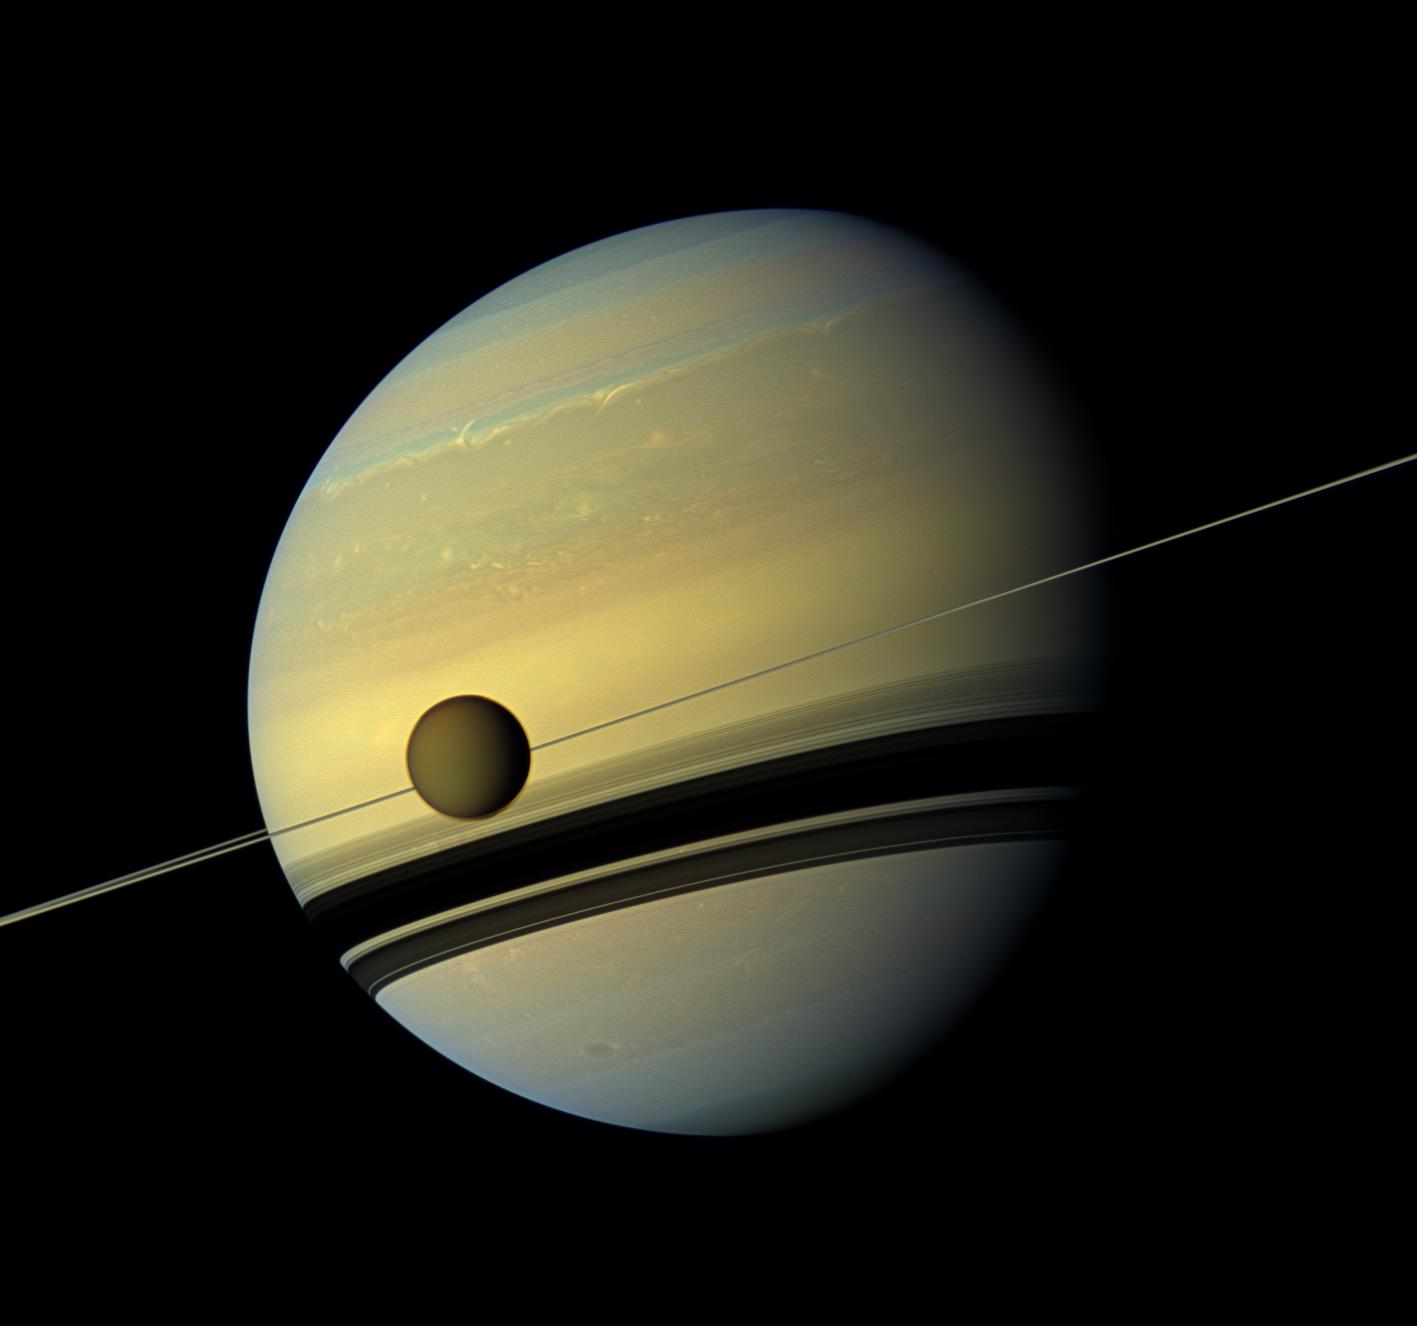 PIA 14922, source: NASA/JPL-Caltech/Space Science Institute